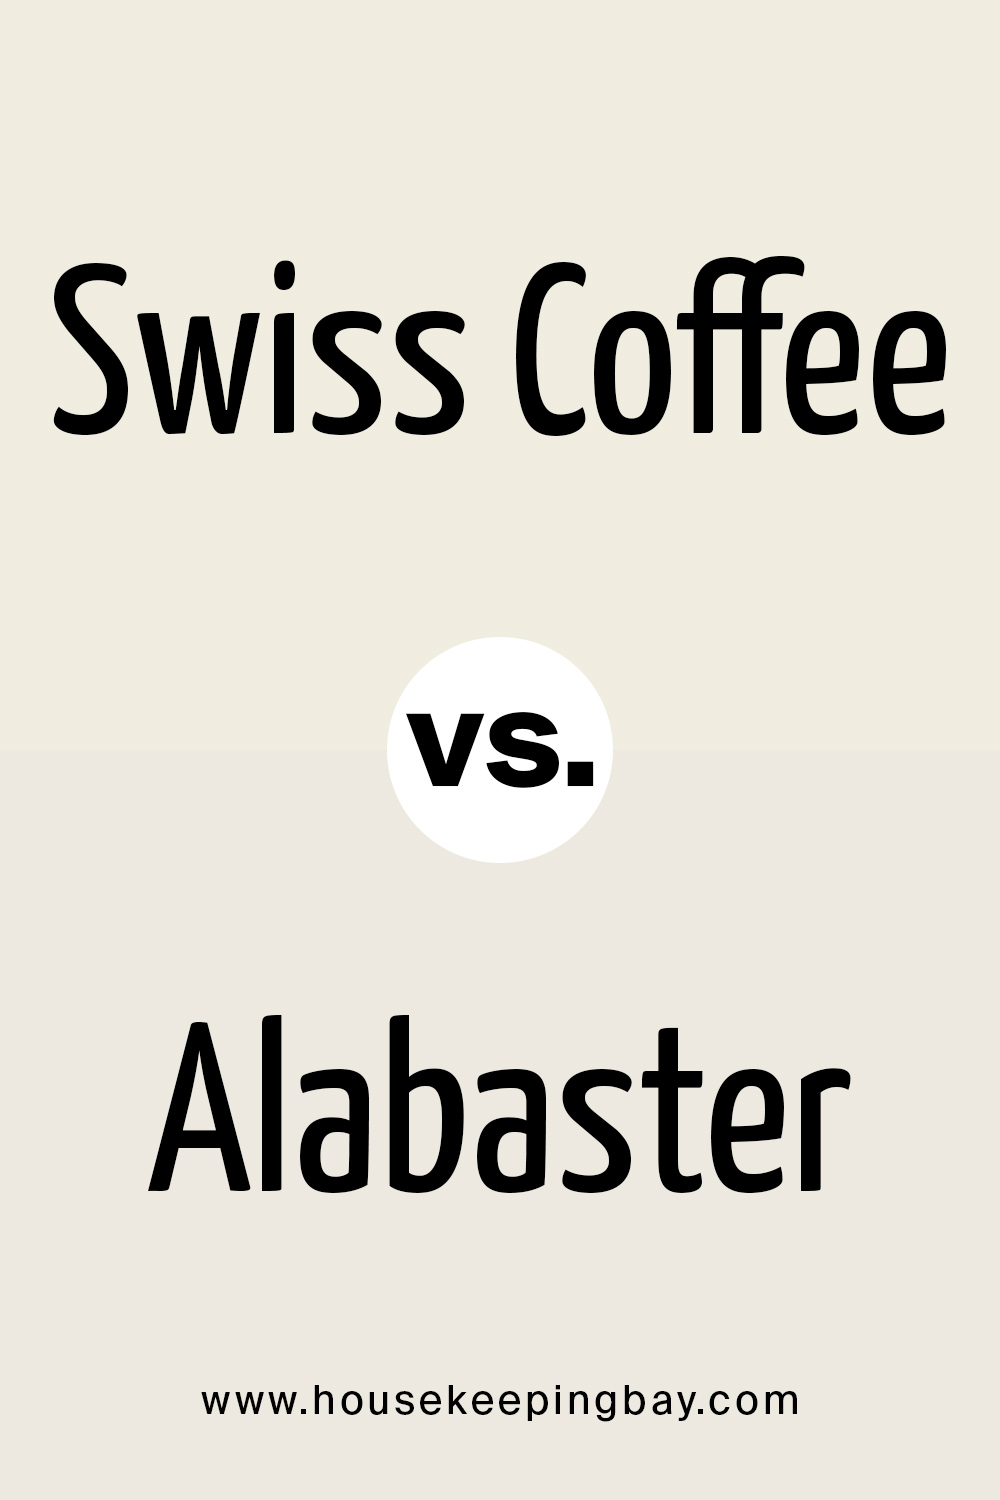 swiss coffee vs alabaster